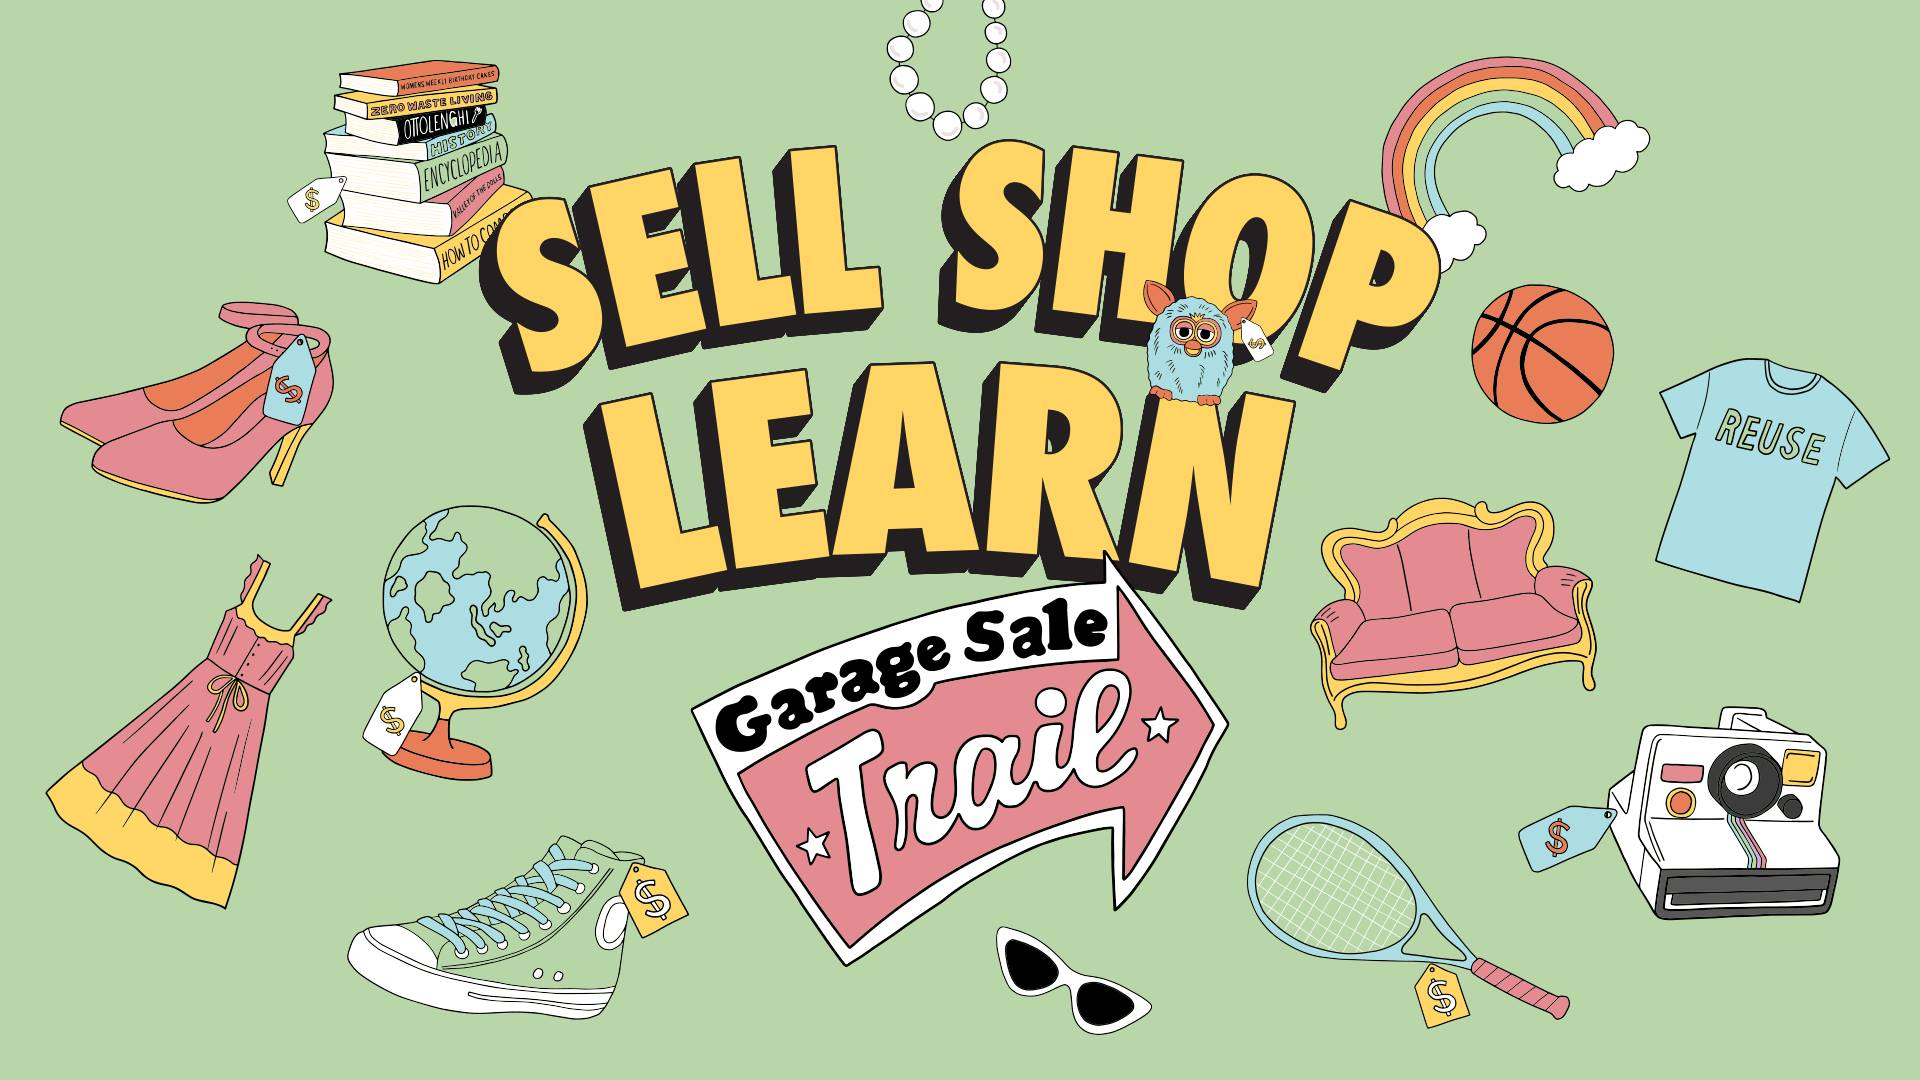 Garage Sale Trail Online Workshops